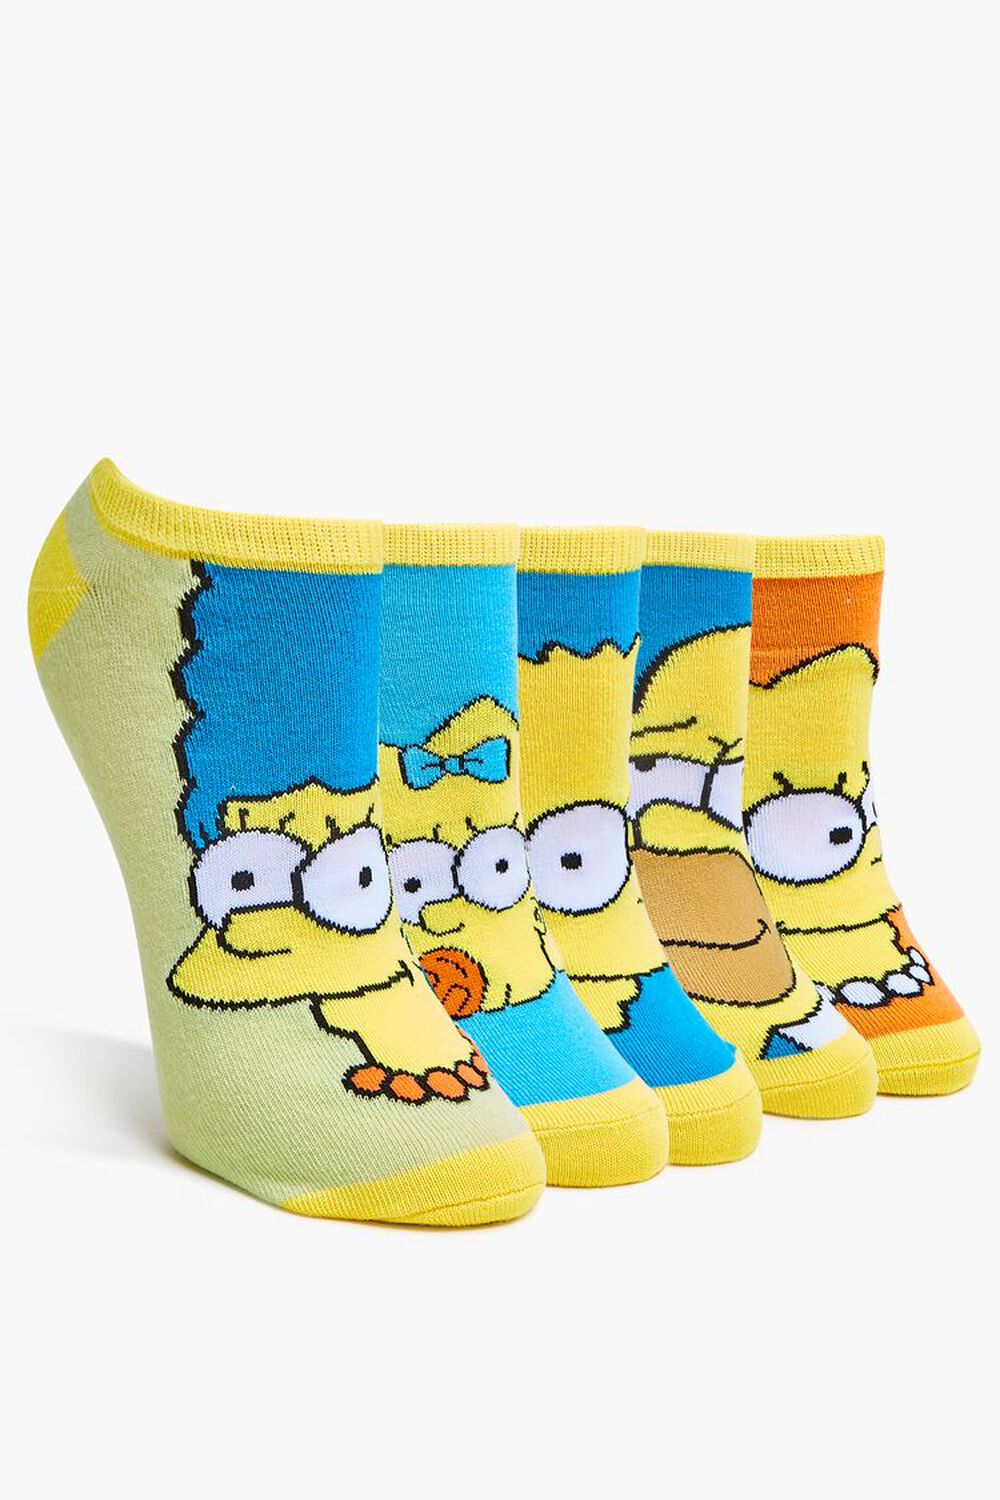 YELLOW/MULTI The Simpsons Ankle Socks Set - 5 pck, image 1